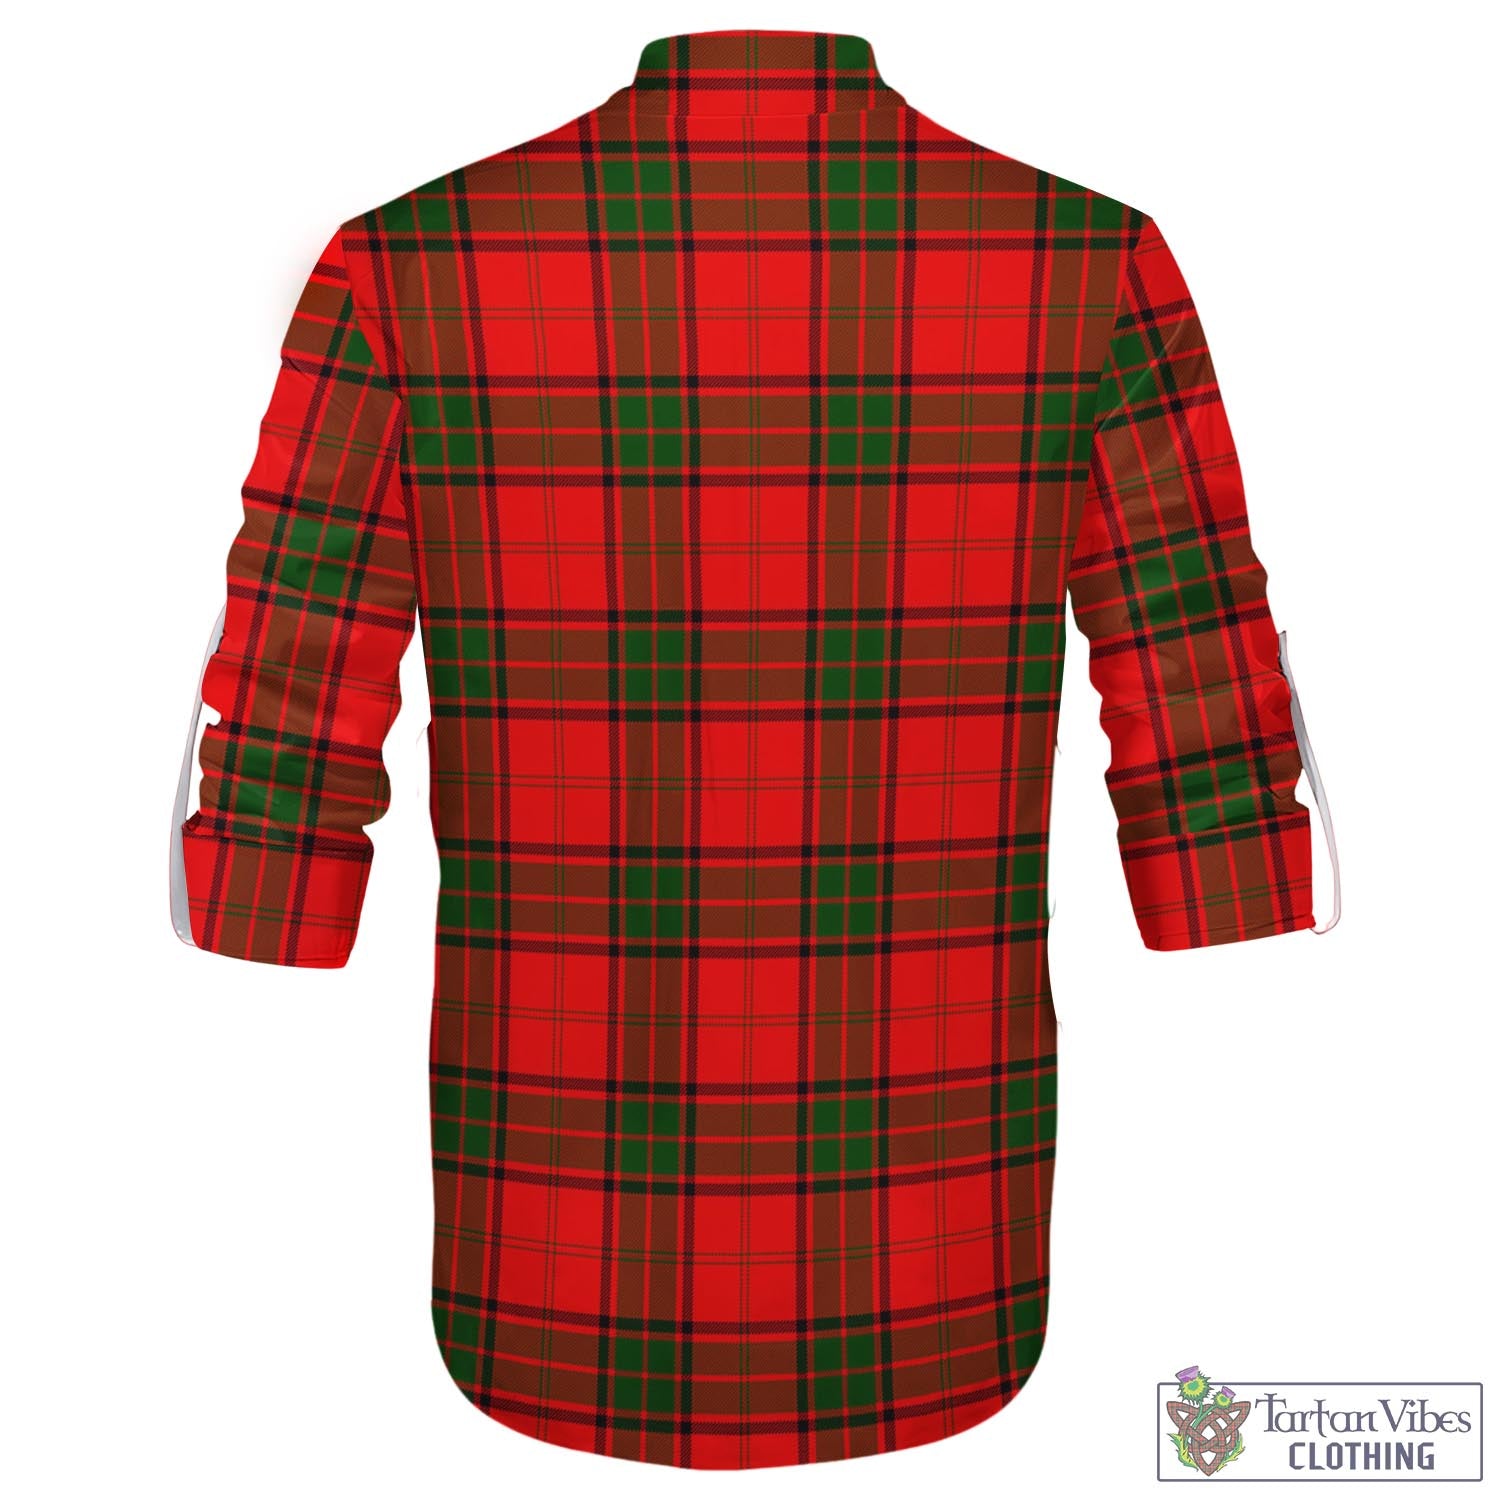 Tartan Vibes Clothing Maxtone Tartan Men's Scottish Traditional Jacobite Ghillie Kilt Shirt with Family Crest